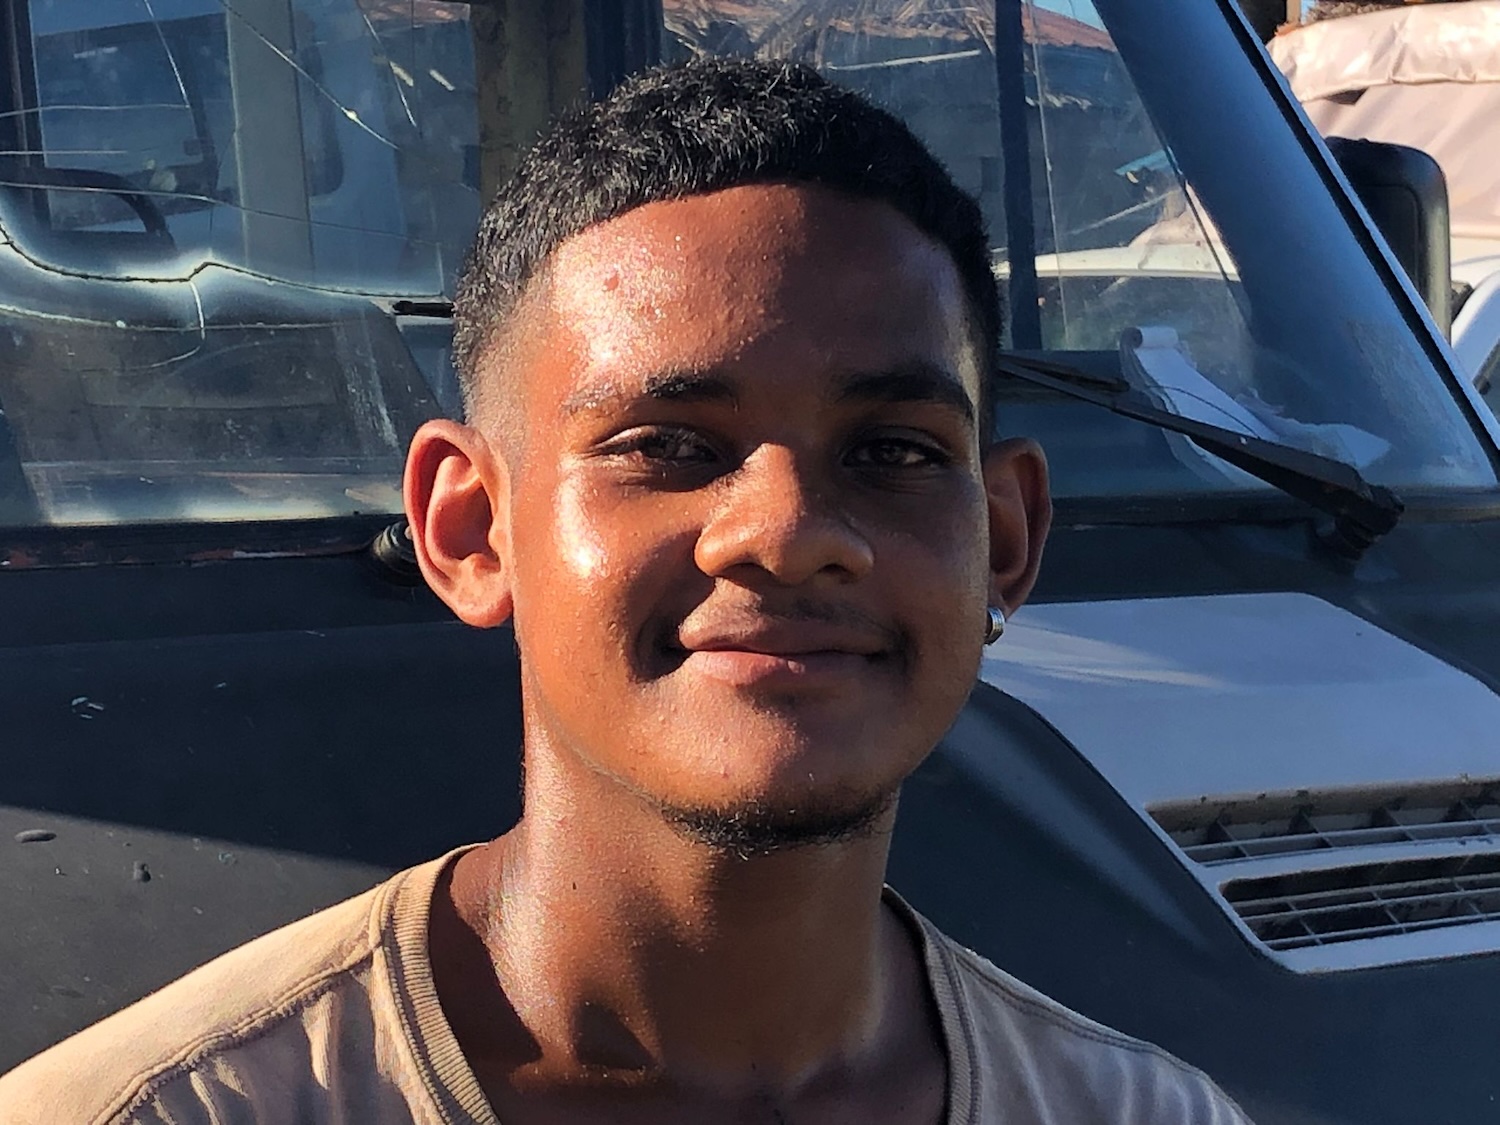 Tafita RAKOTOARISOA a 18 ans. Il est apprenti pour devenir conducteur de taxi-brousse © Globe Reporters